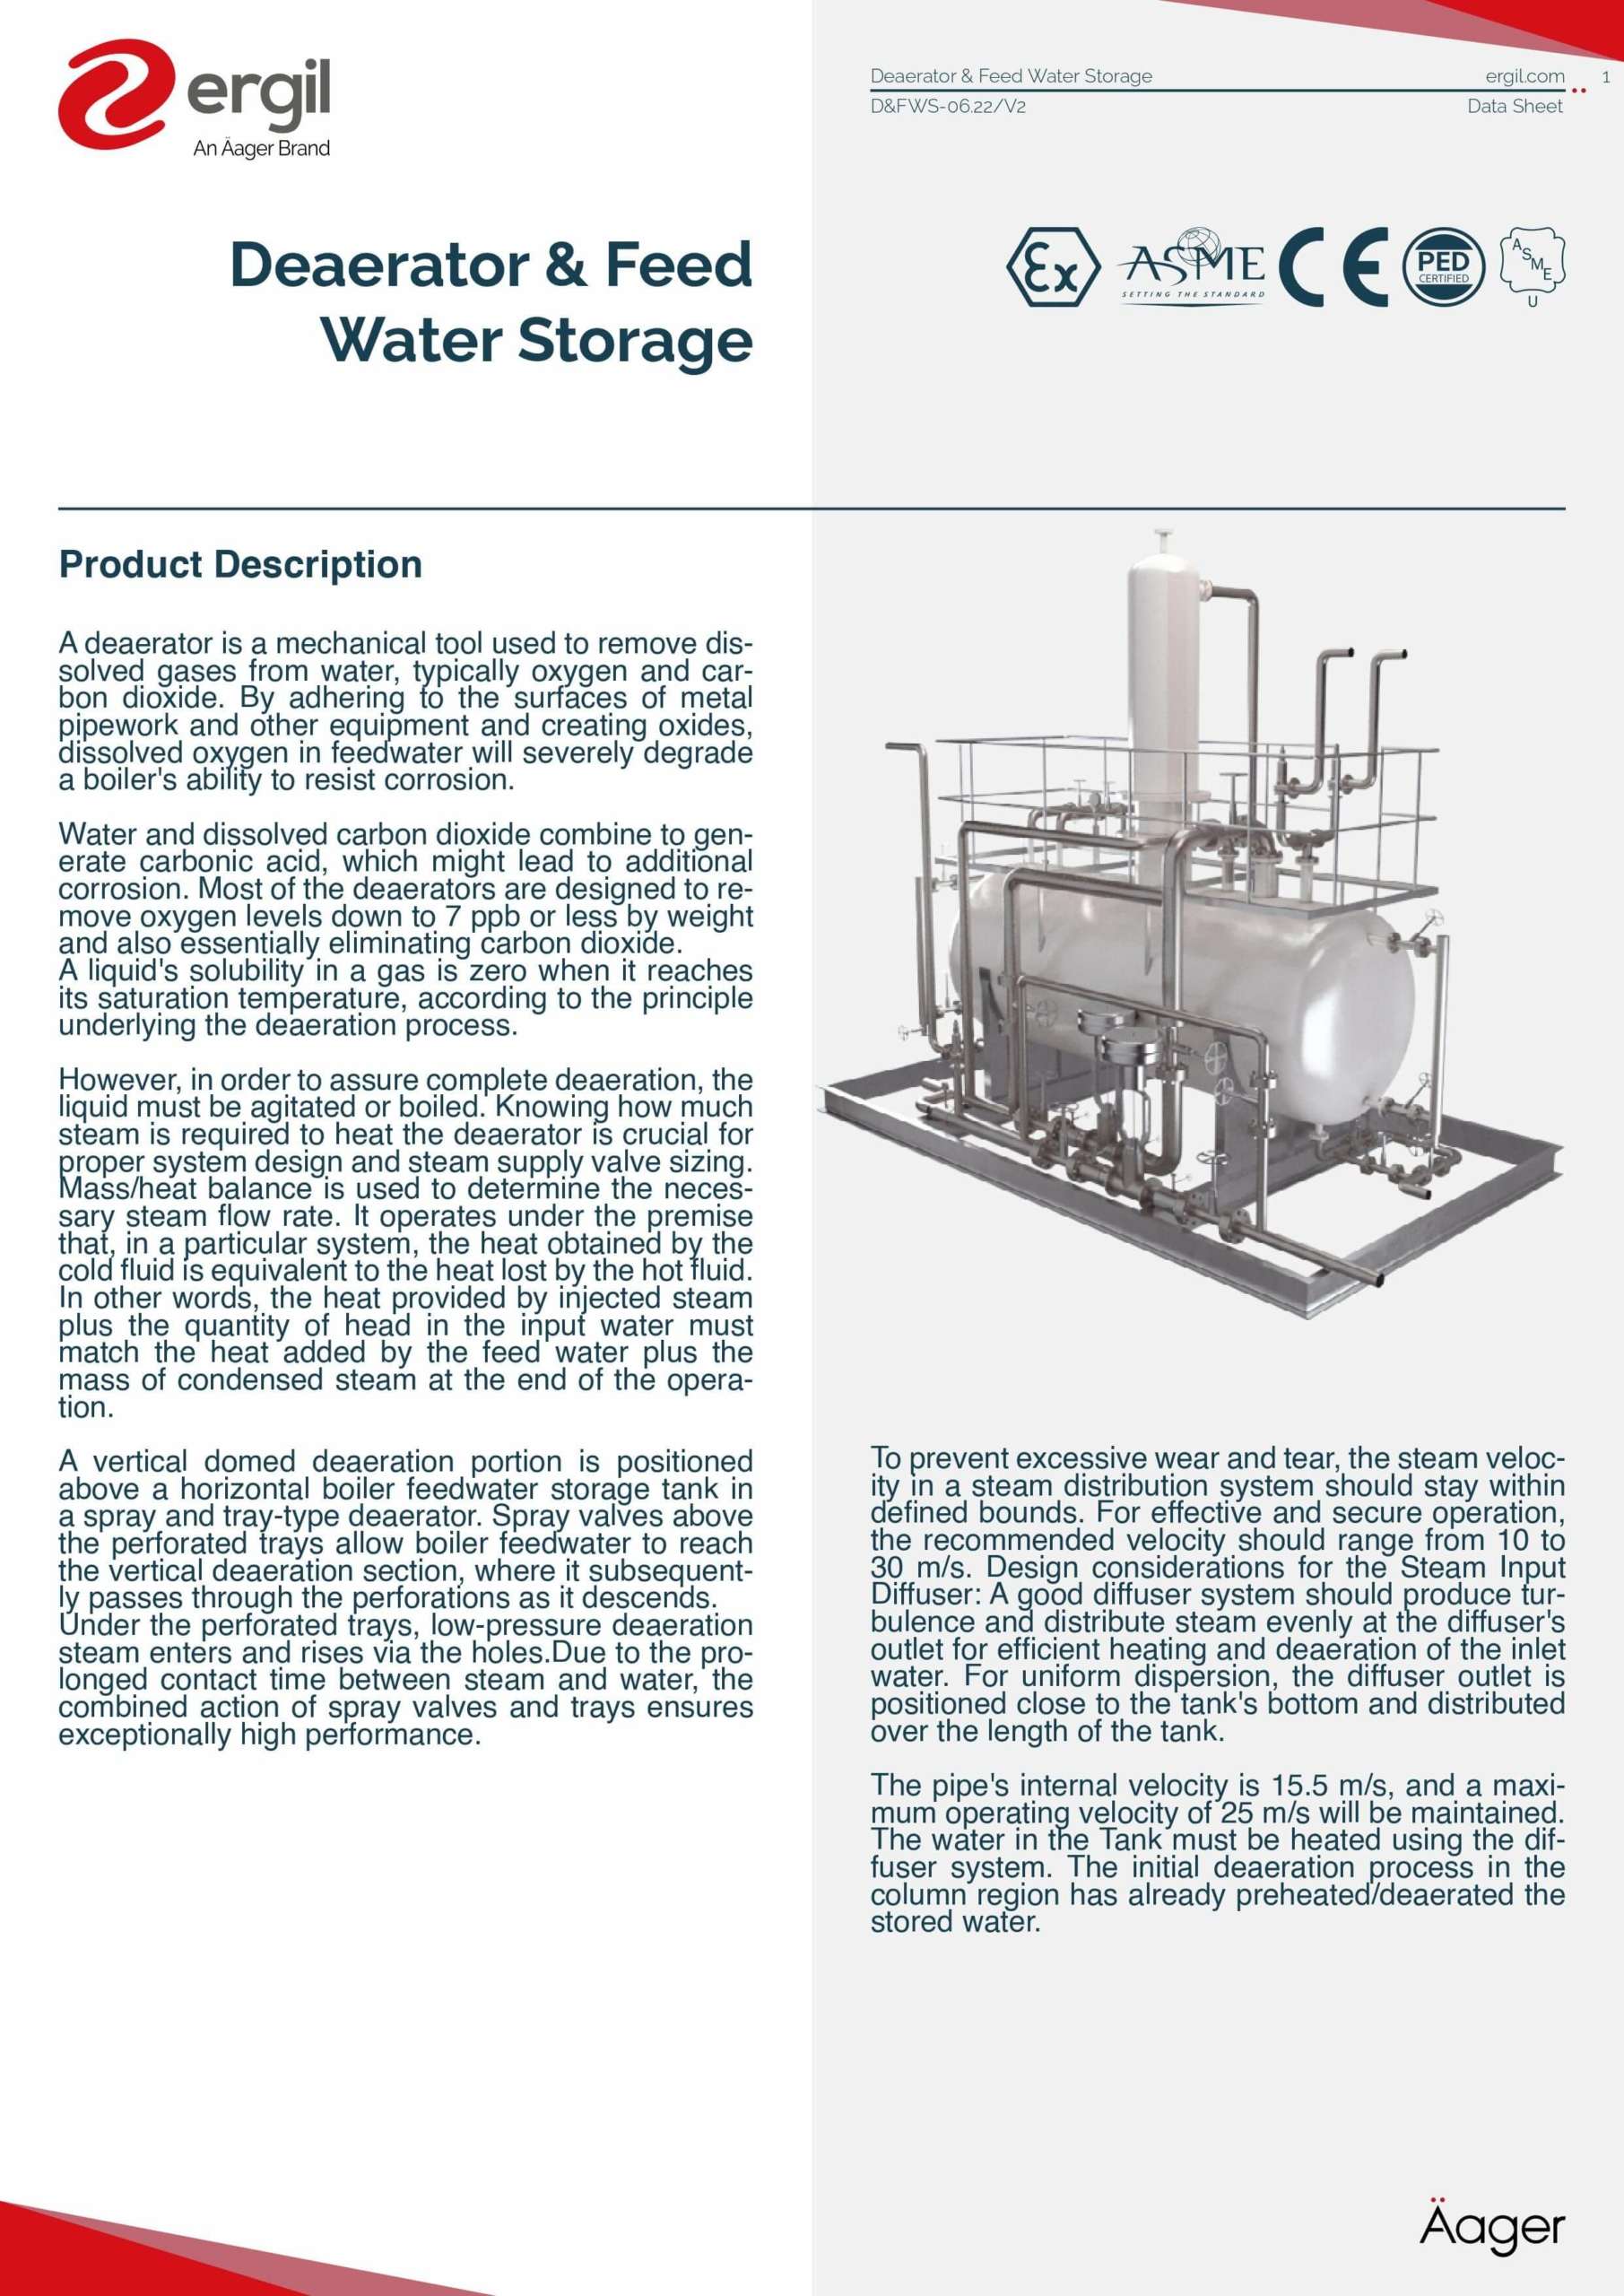 Deaerator Vessels & Feed Water Storage Tanks pdf